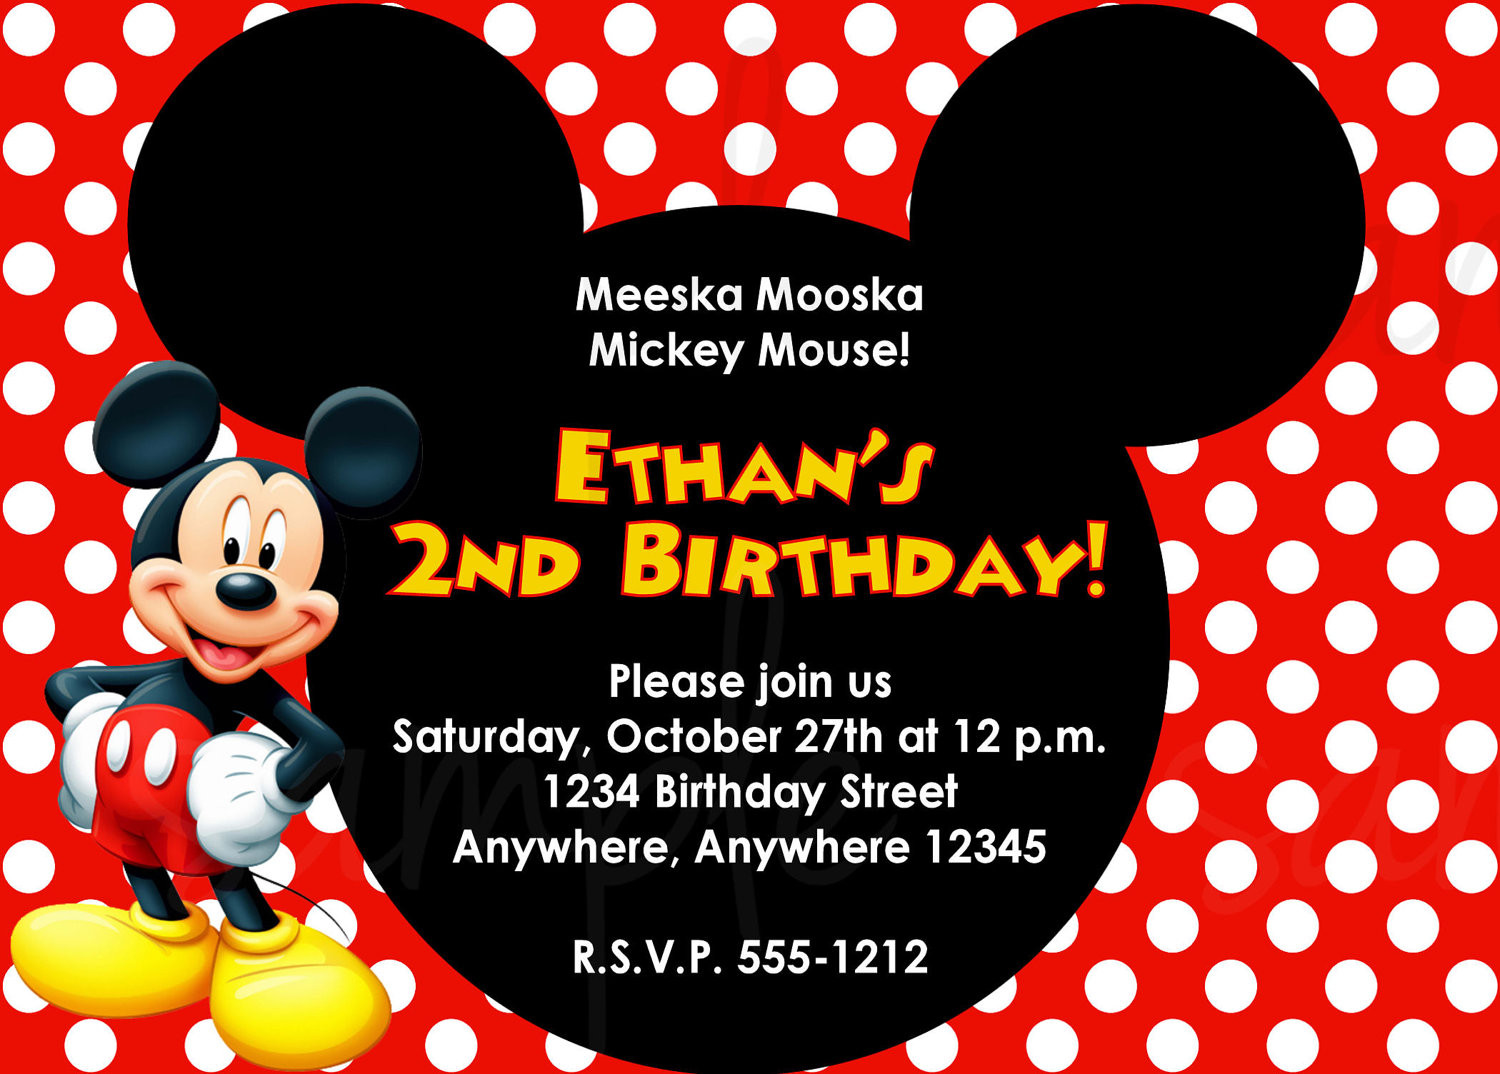 Best ideas about Mickey Birthday Invitations
. Save or Pin Mickey Mouse Birthday Invitation Now.